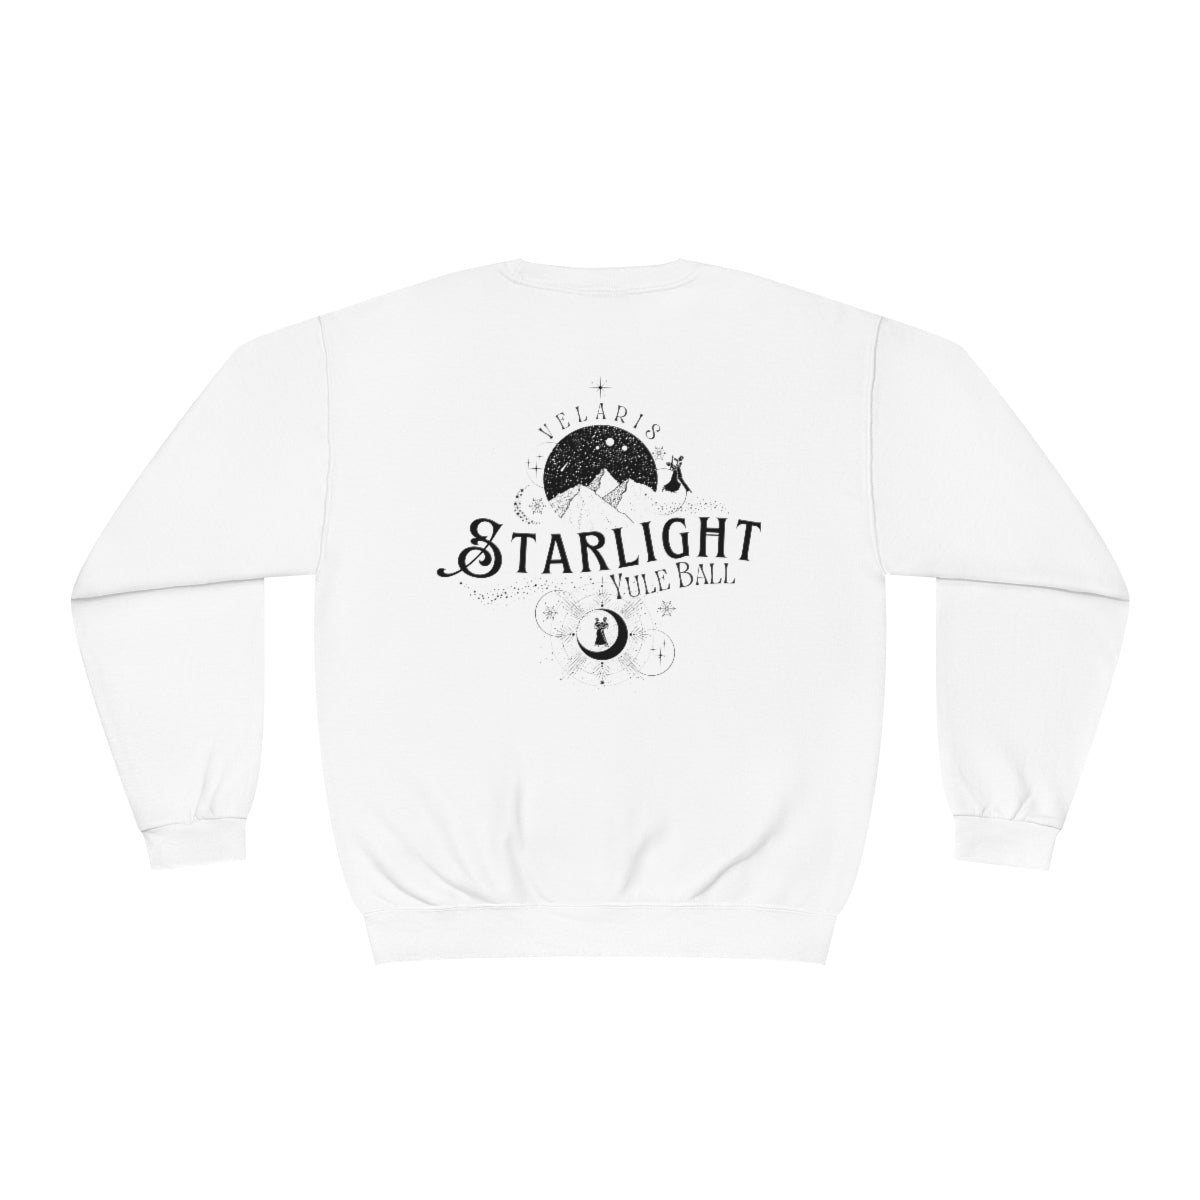 Starlight Yule Ball BACK DESIGN Crewneck Sweatshirt